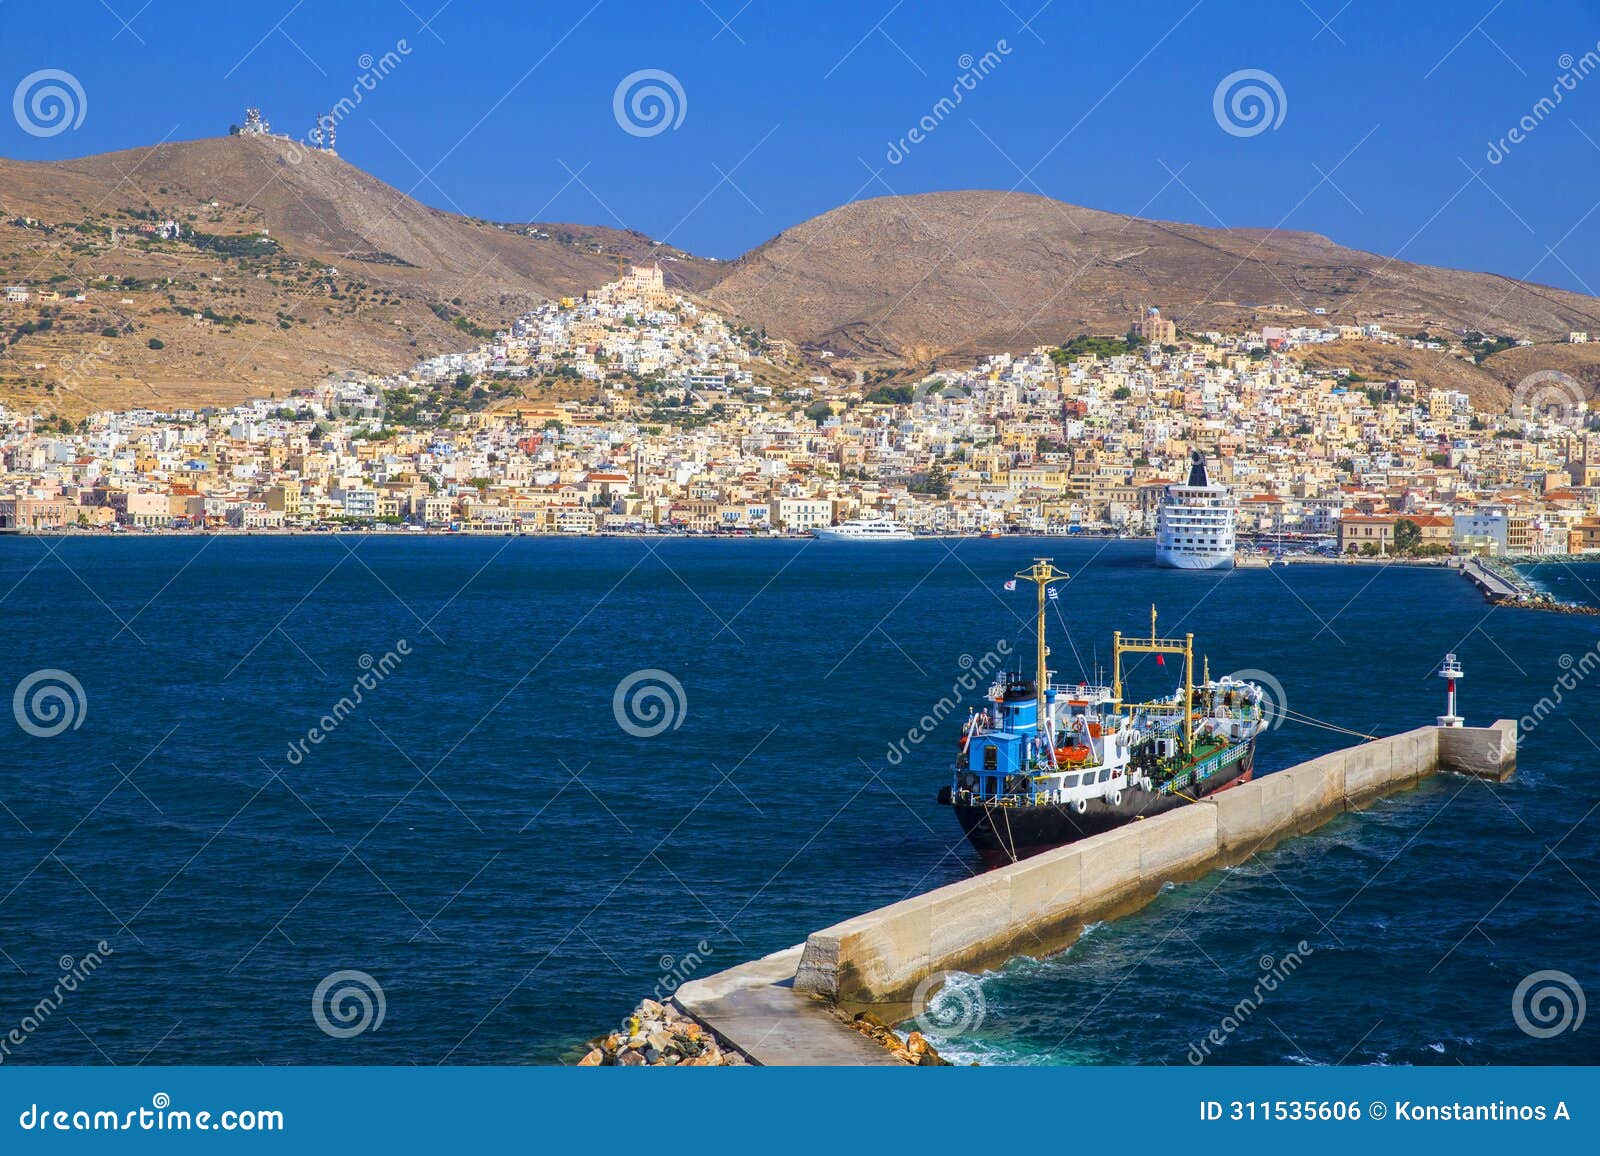 syros or siros island in greece summer tourist resort